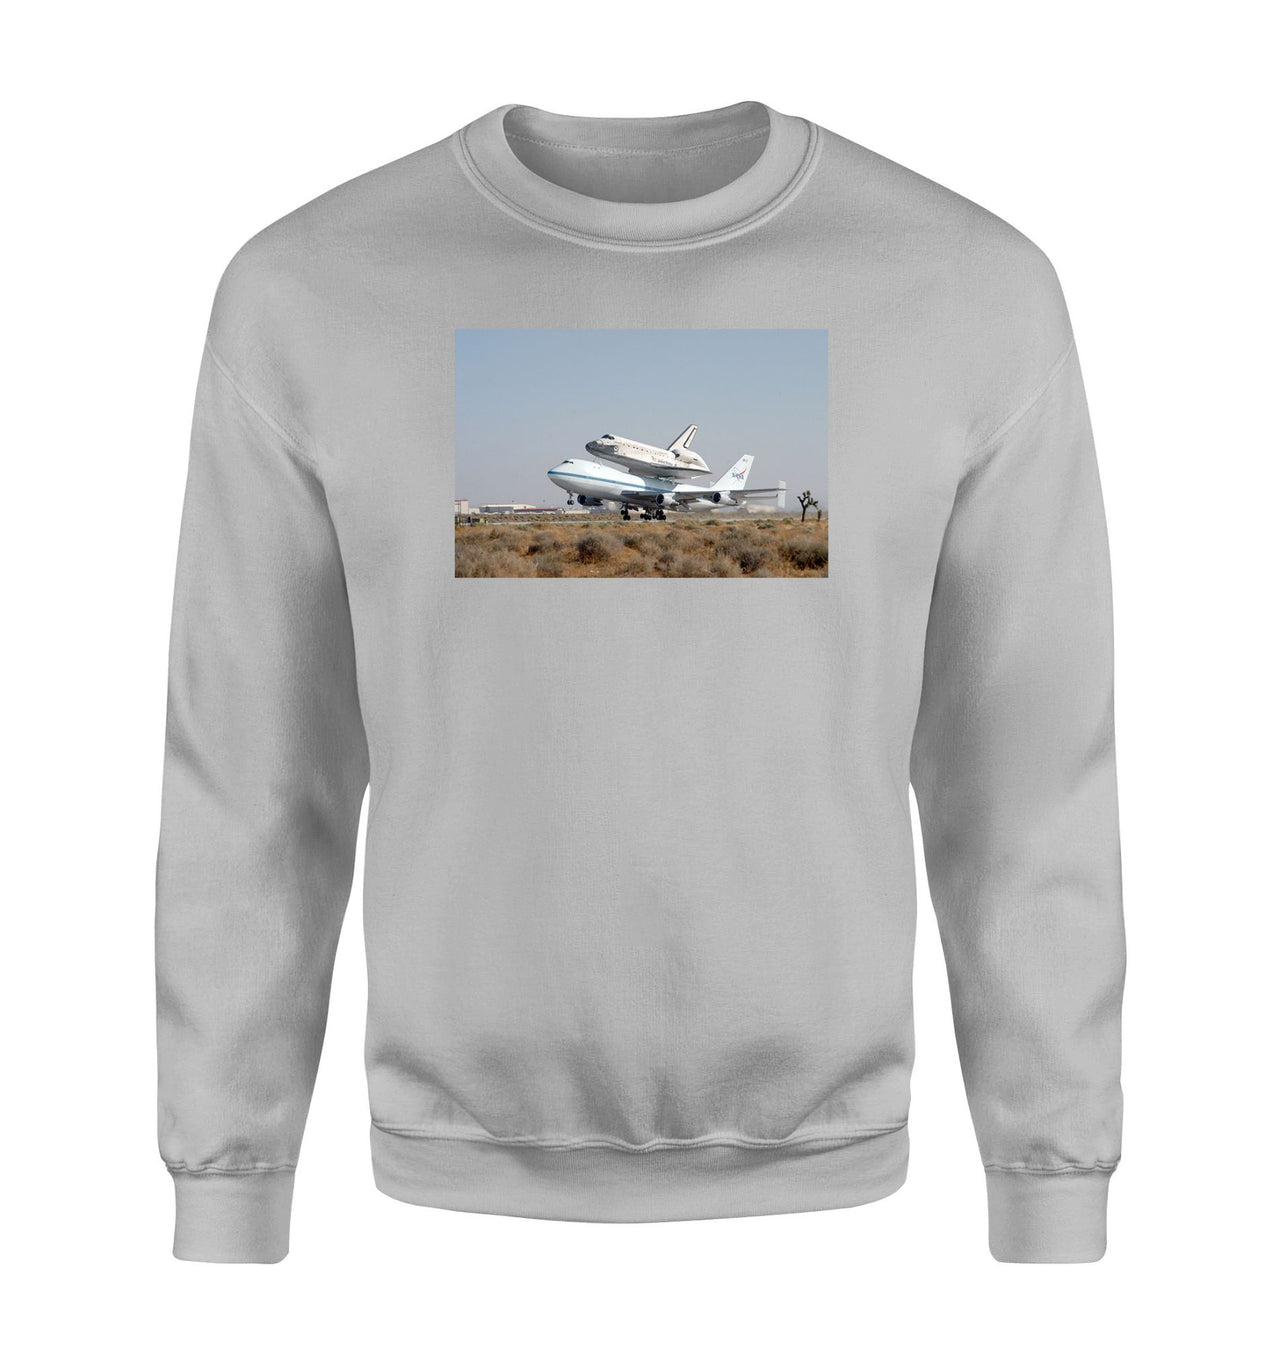 Boeing 747 Carrying Nasa's Space Shuttle Designed Sweatshirts